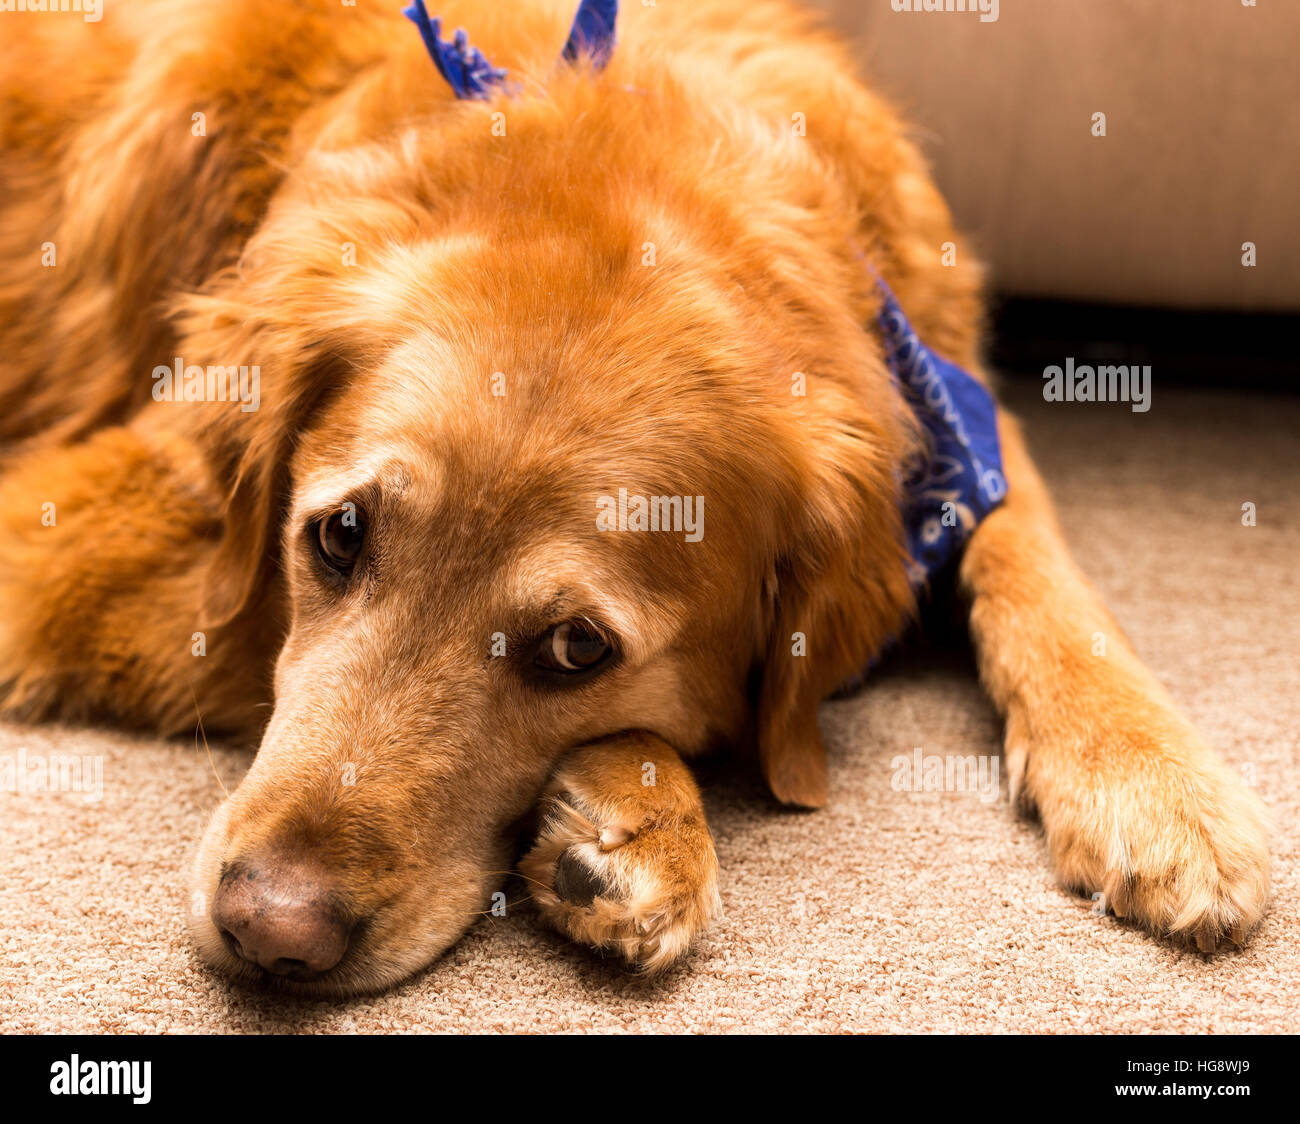 Golden retriever dog laying on a carpet. Stock Photo